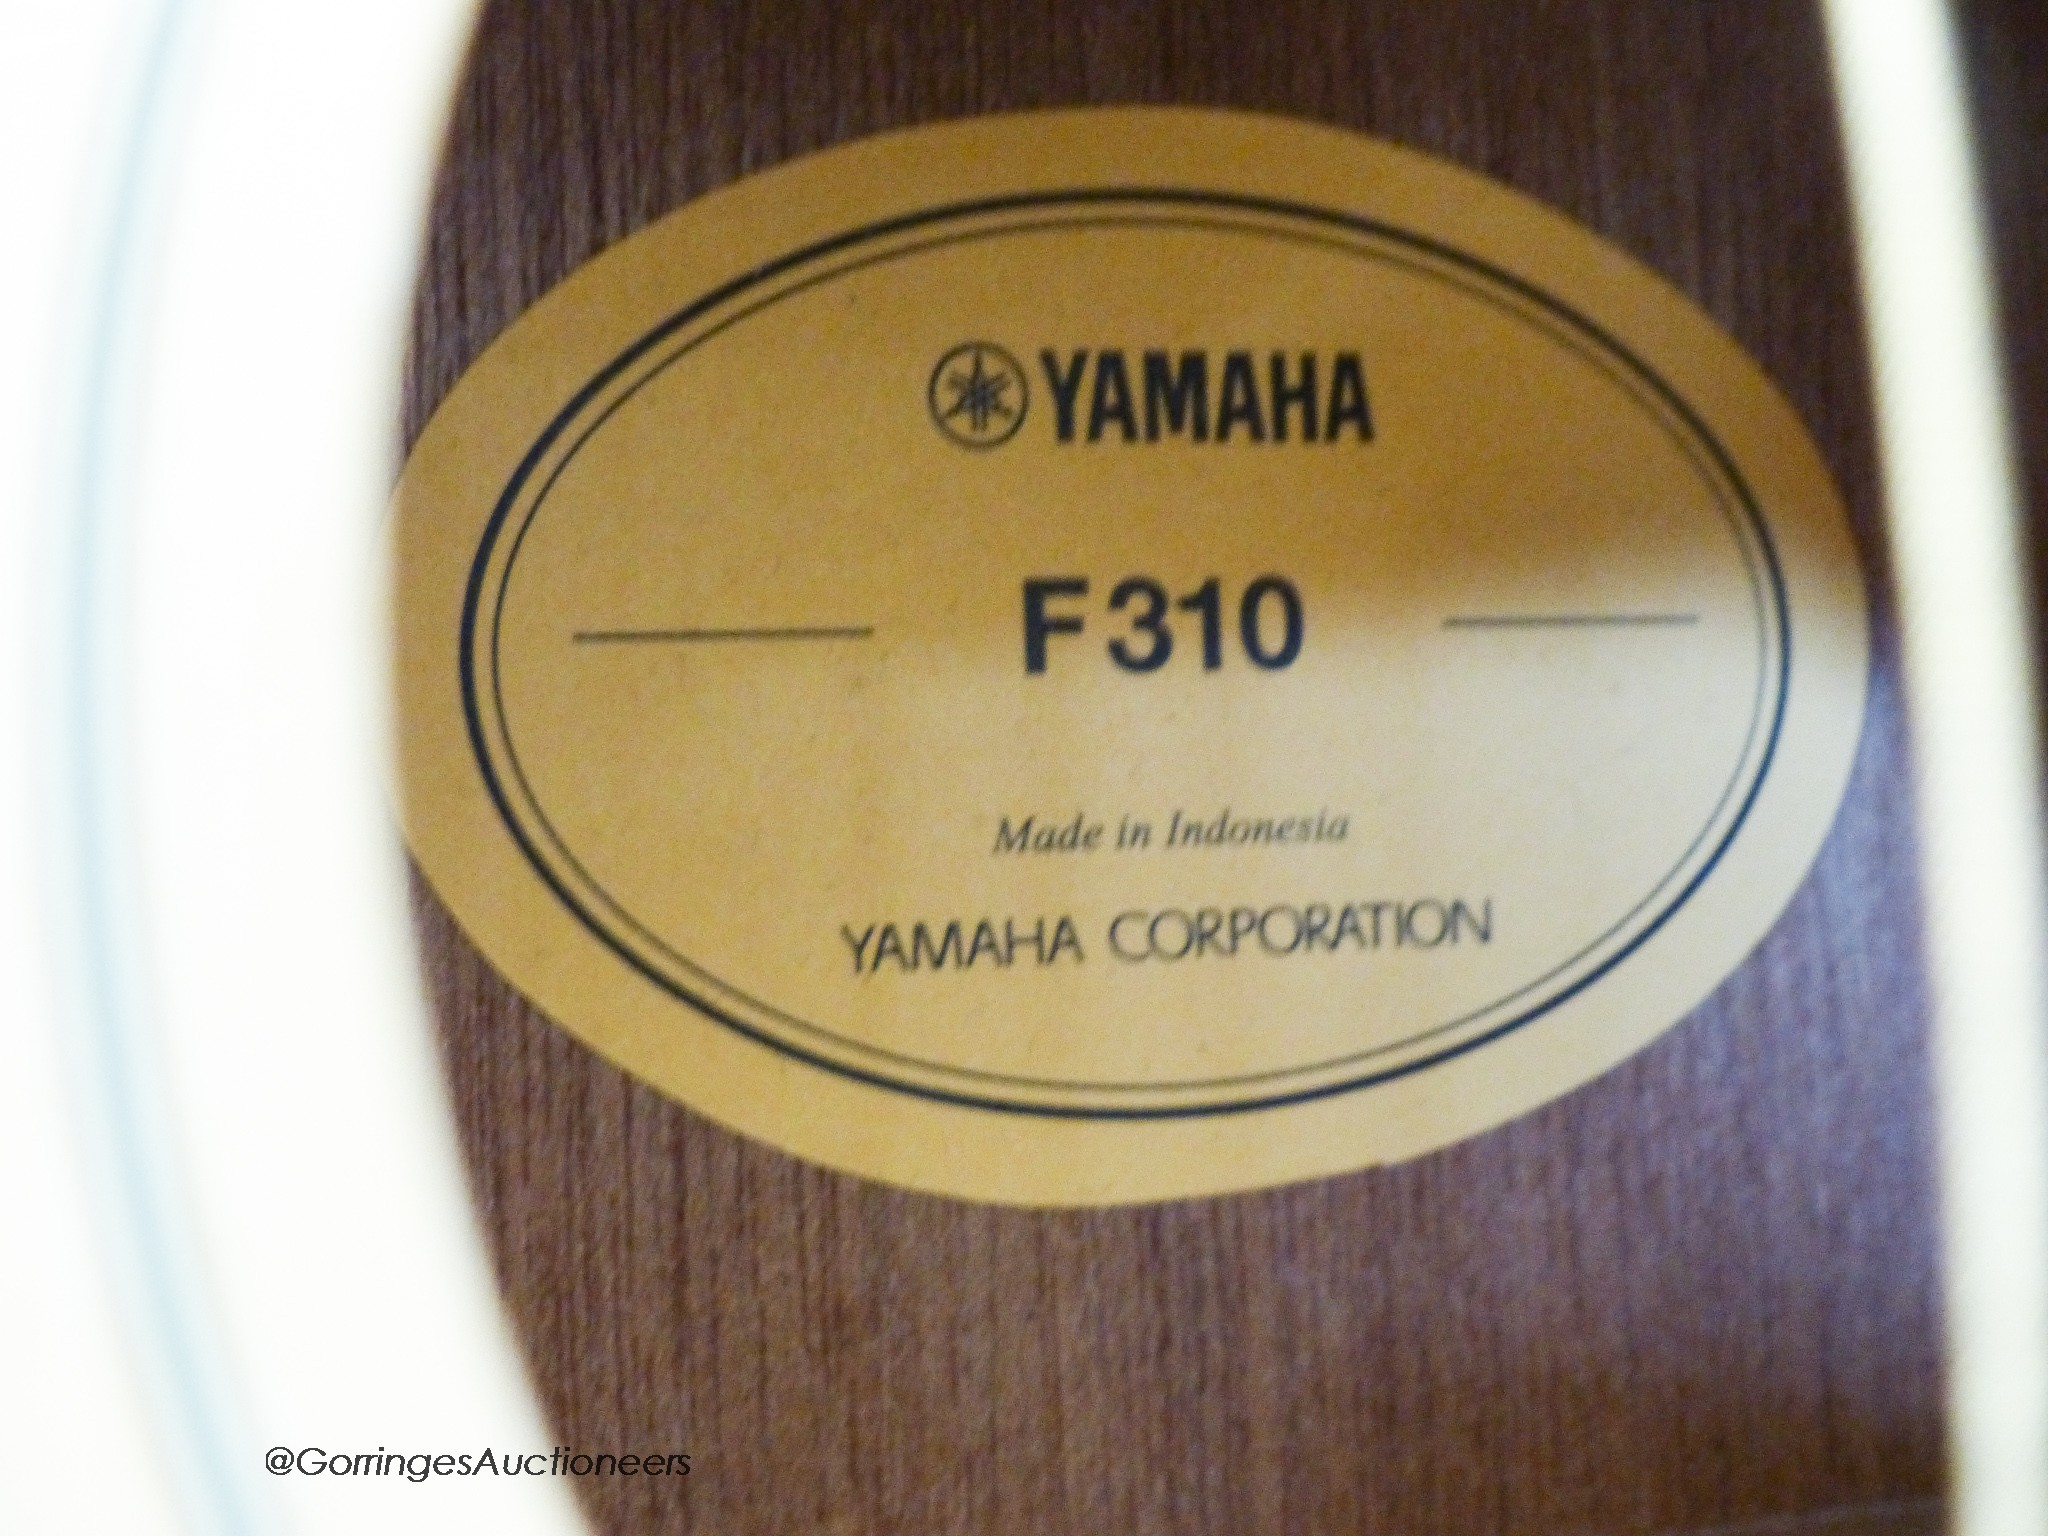 A Yamaha F310 acoustic guitar, carry case